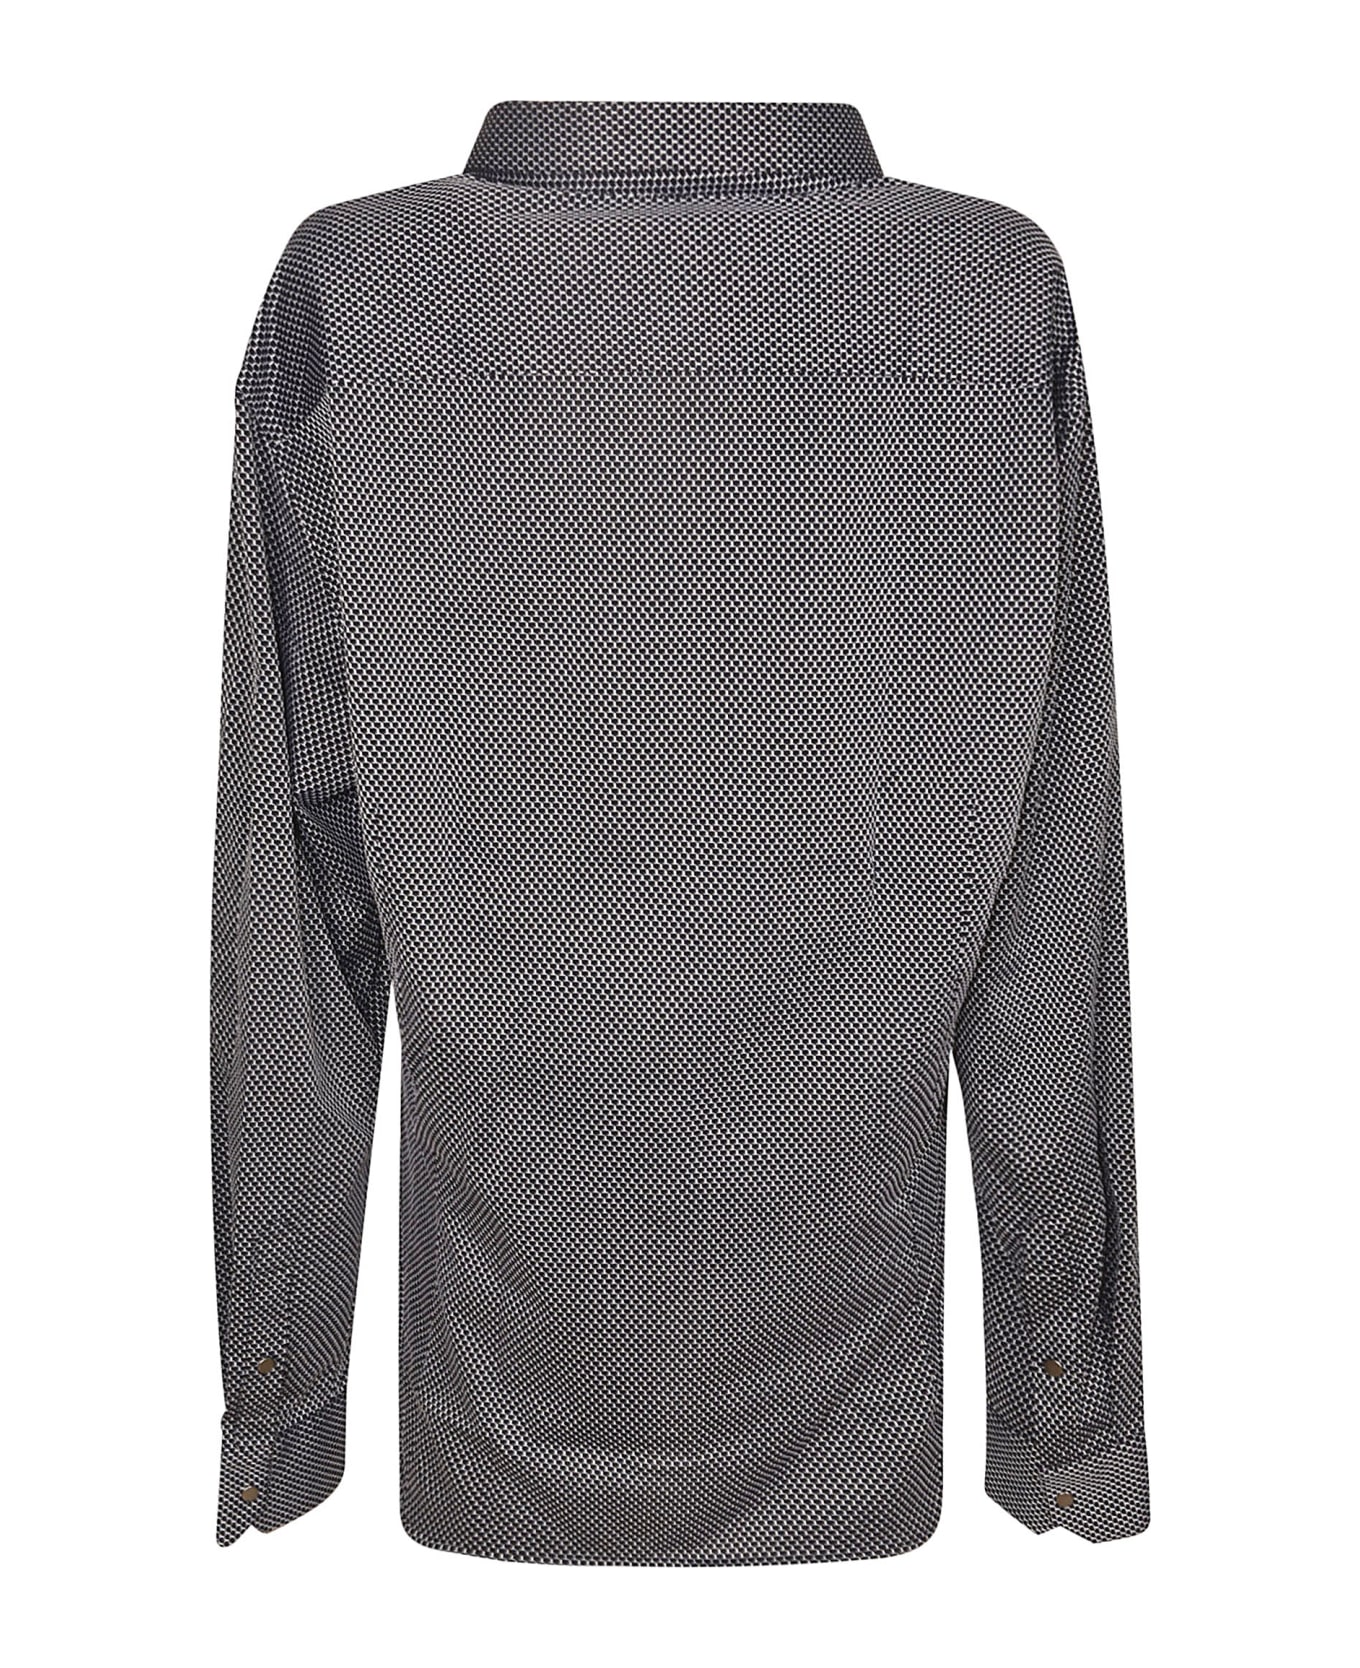 Giorgio Armani Zip Shirt - Fbwf シャツ